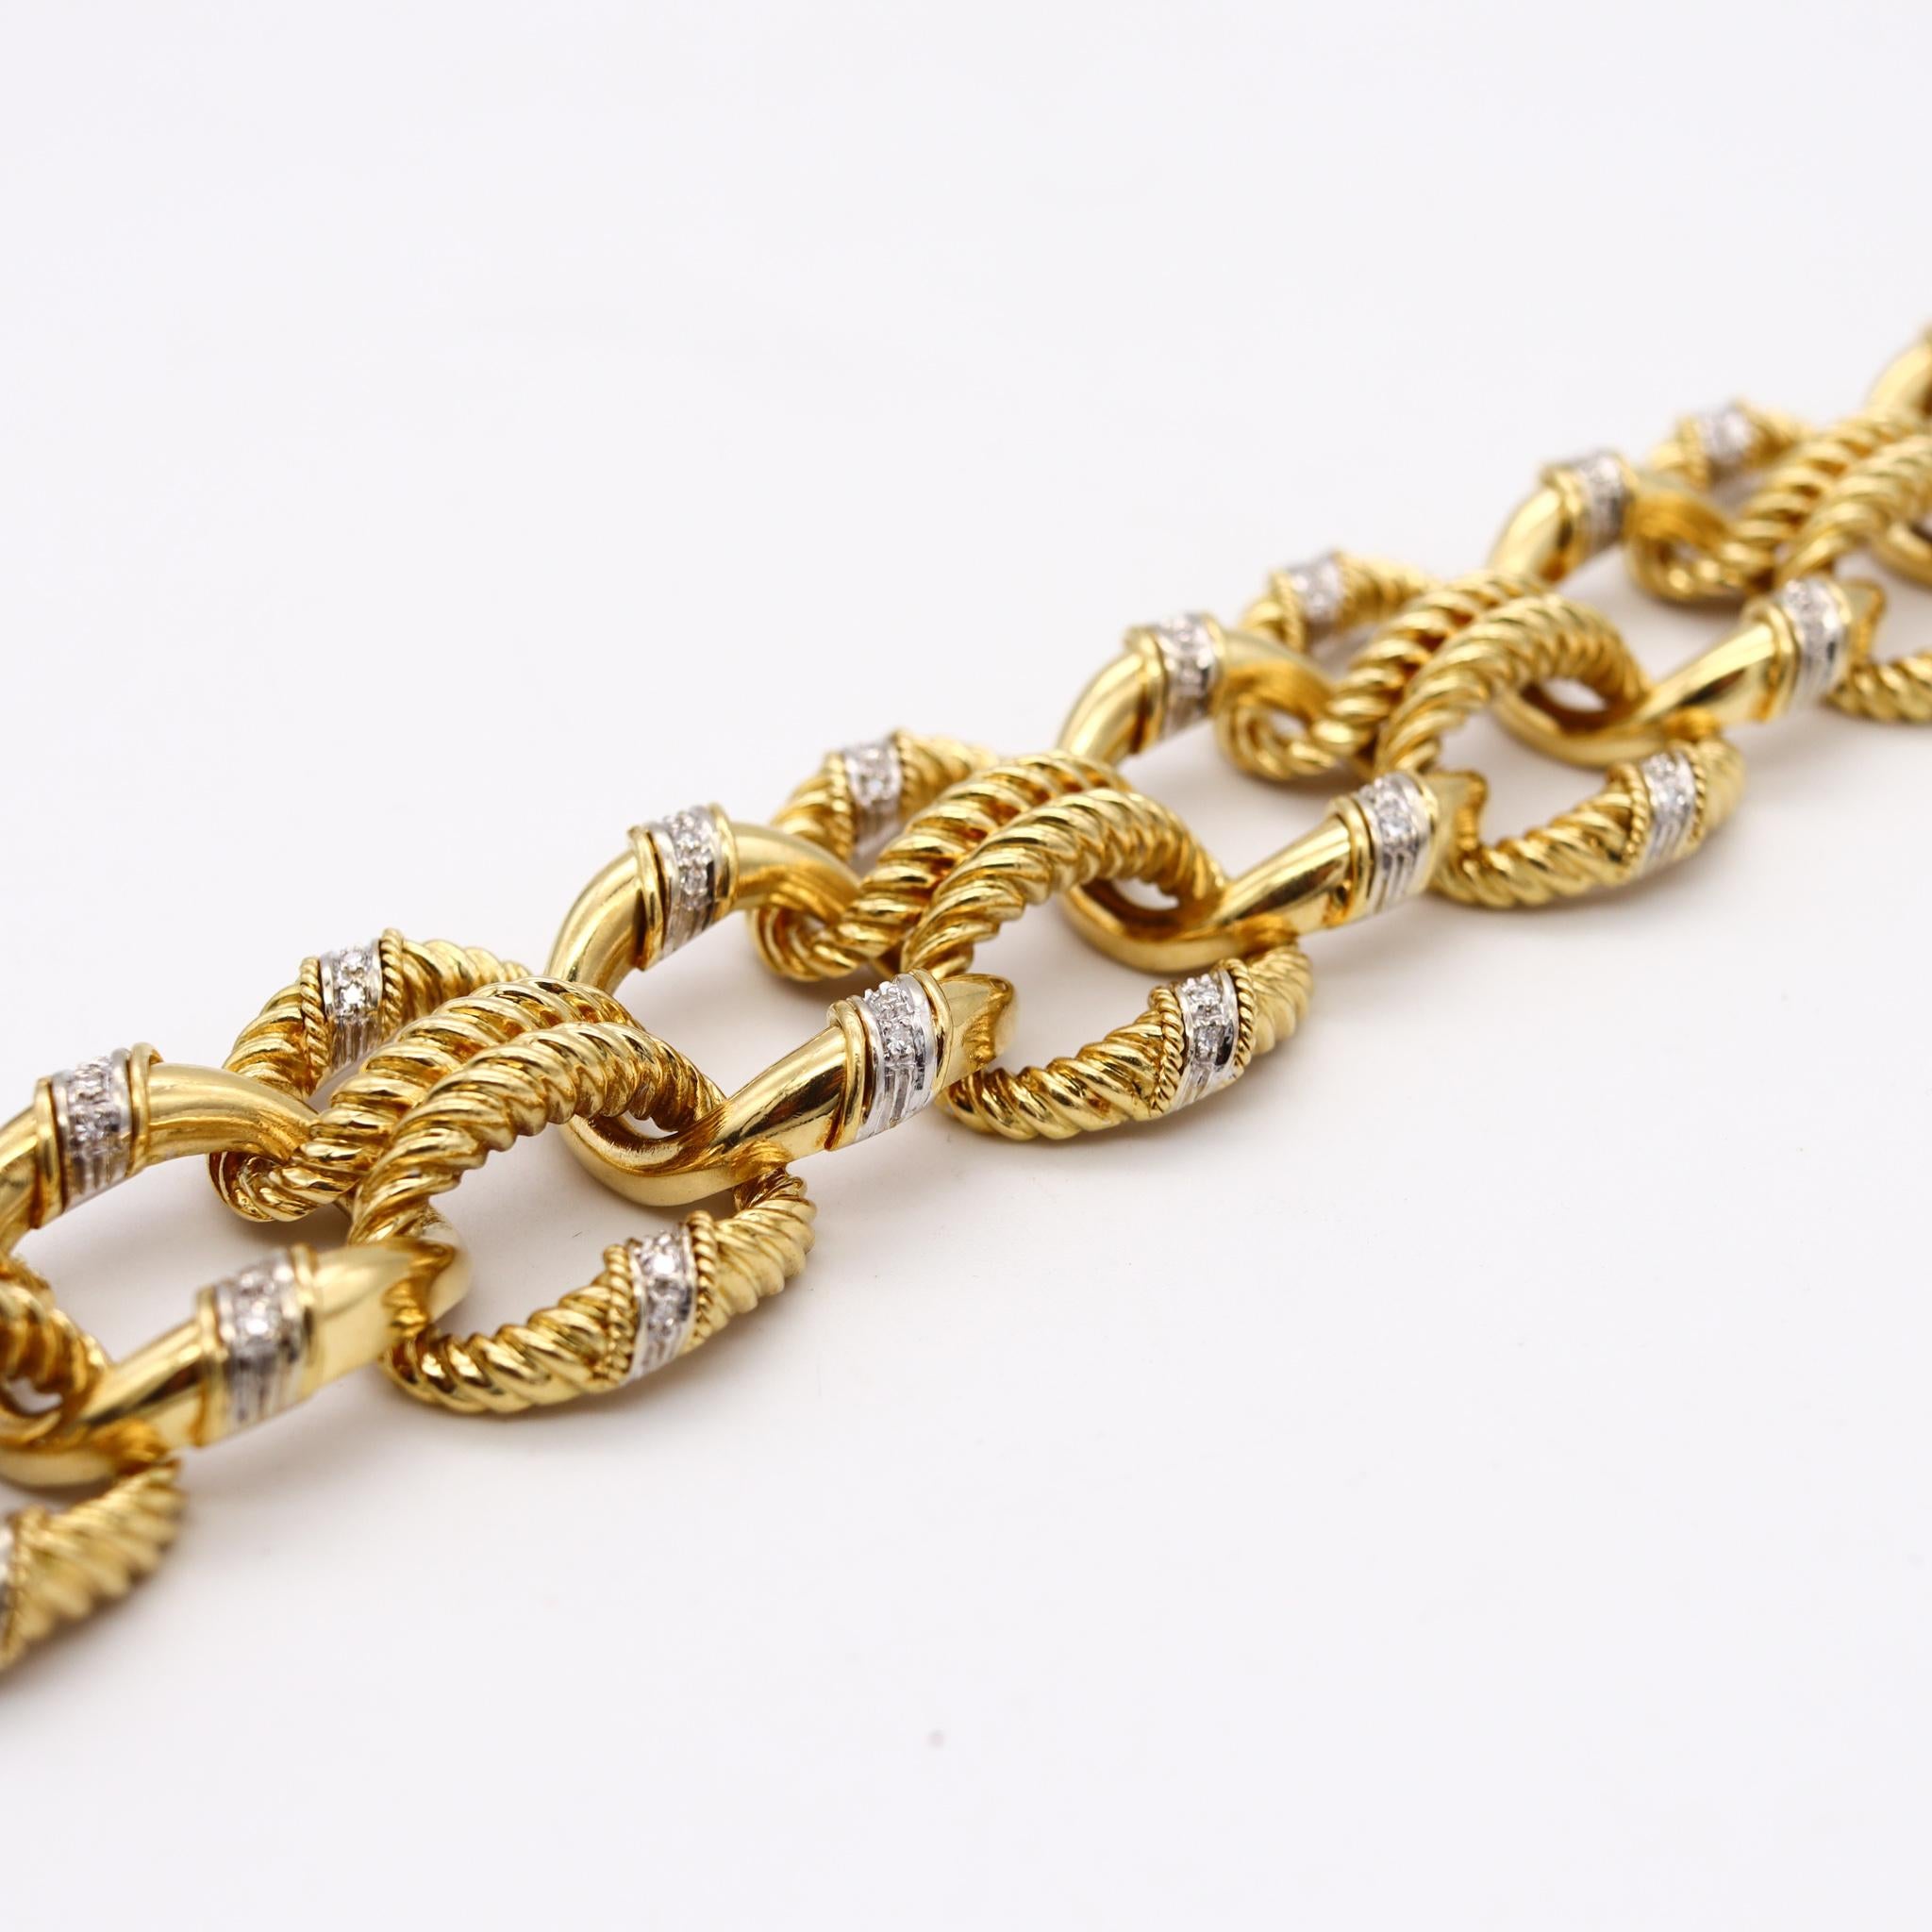 Brilliant Cut Van Cleef & Arpels 1960 NY Rope Links Bracelet 18 Kt Gold with 1.78 Ctw Diamonds